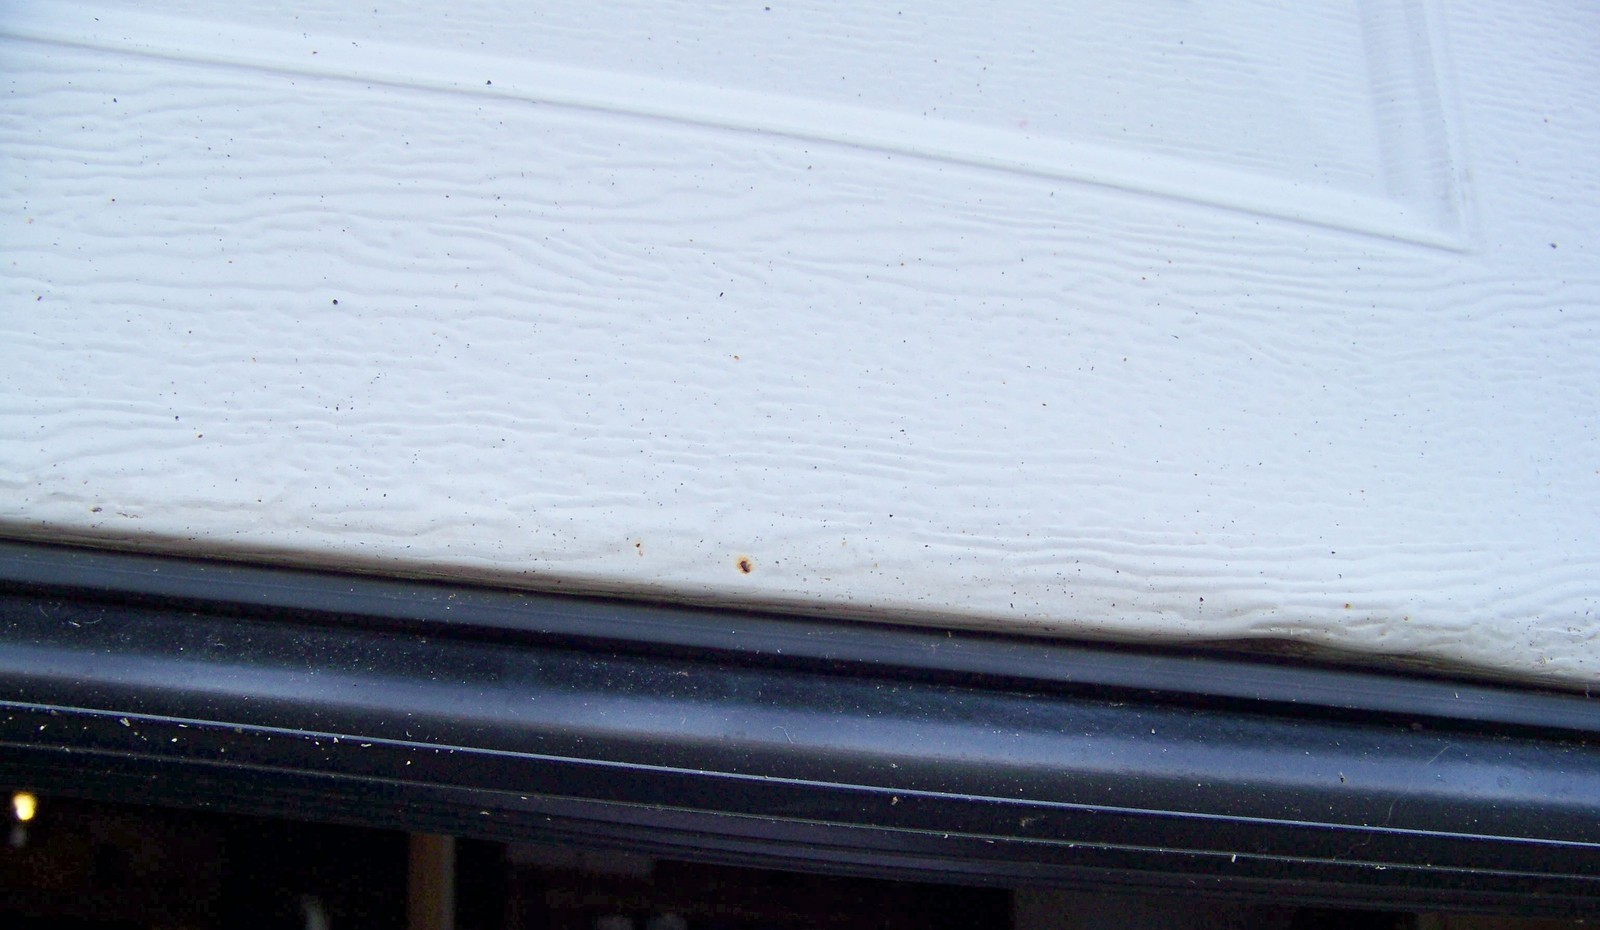 Garage Door Bottom Weather Seal Kit, How Much Does It Cost To Replace Garage Door Bottom Seal